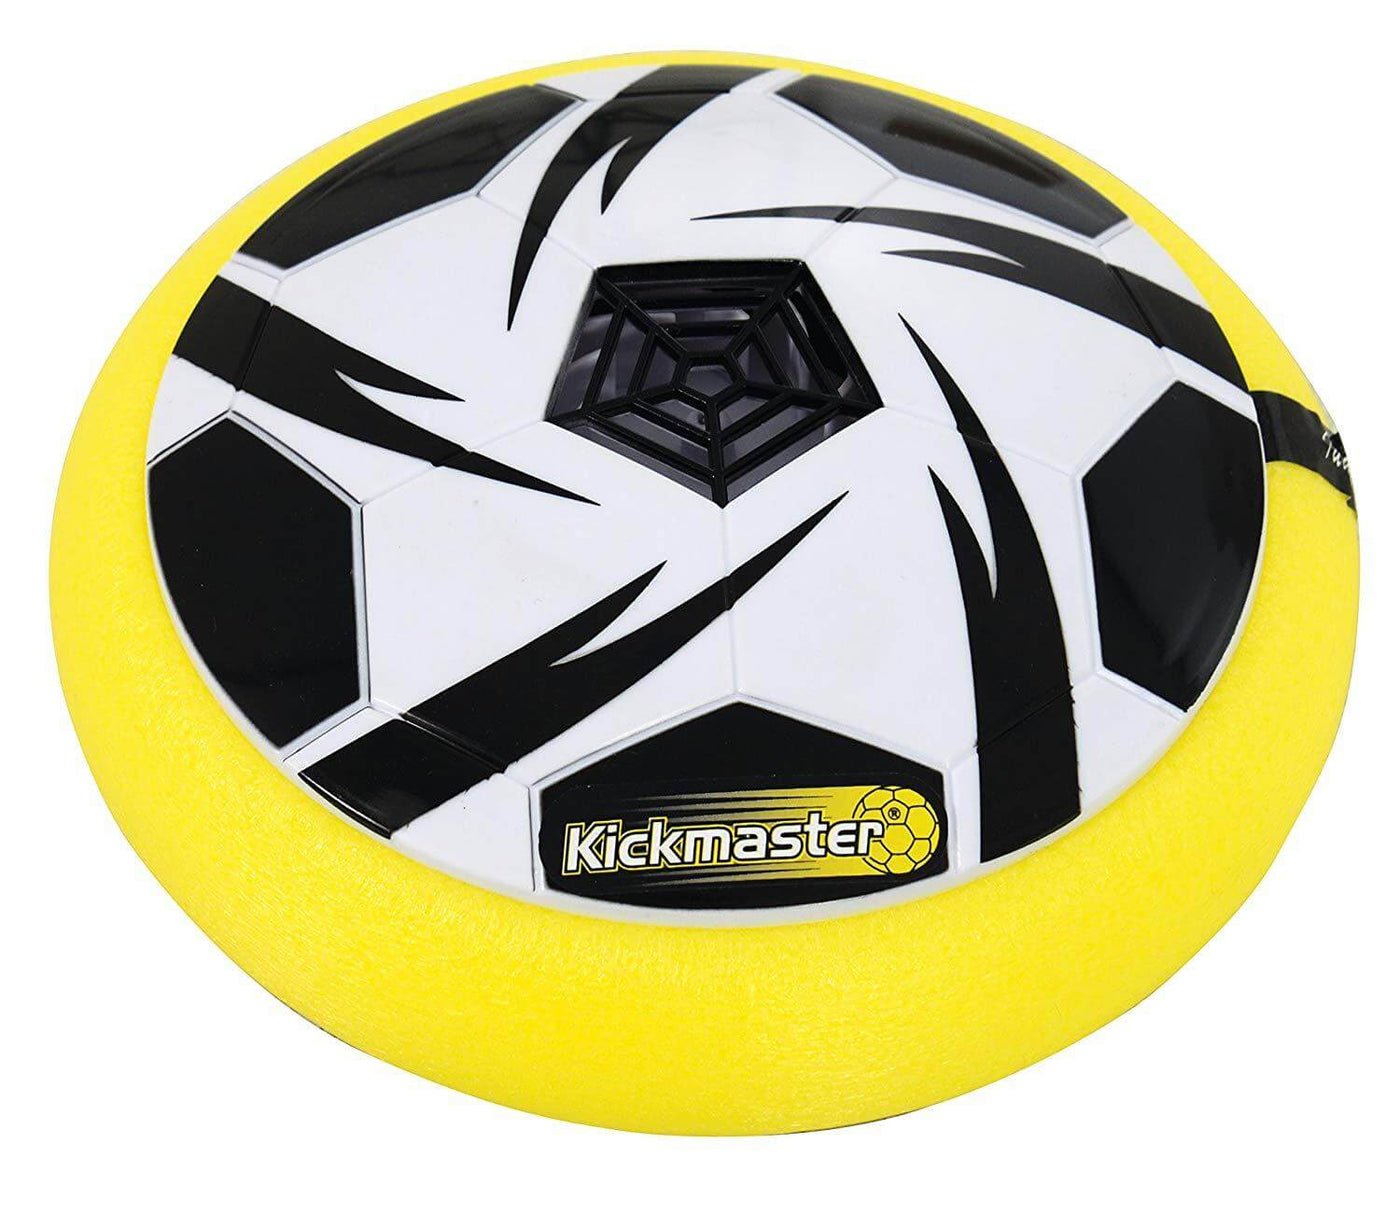 Kickmaster Glide Football play football Earthlets